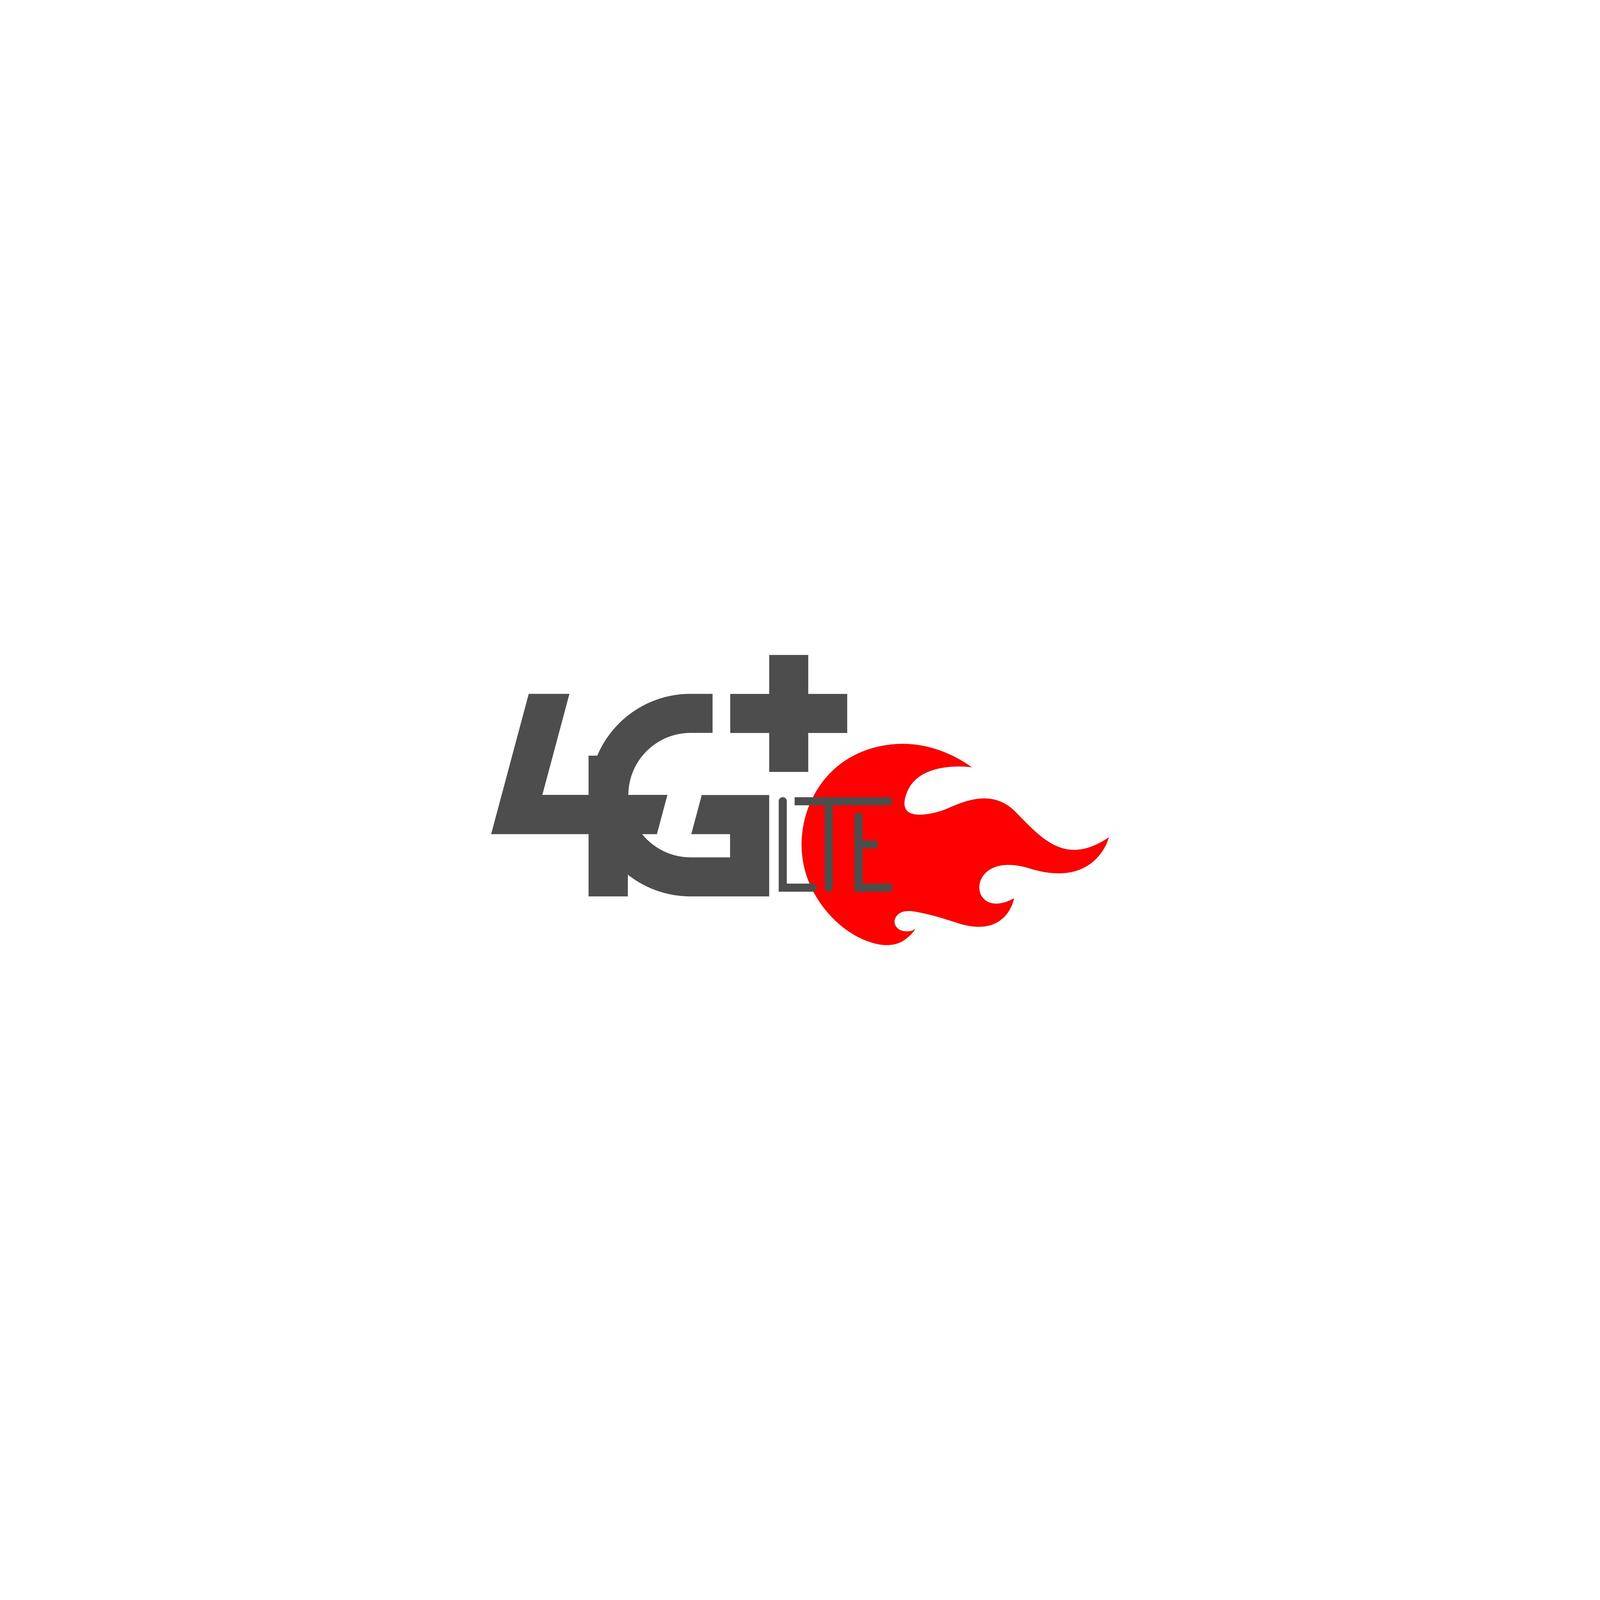 4G LTE logo icon illustration by bellaxbudhong3